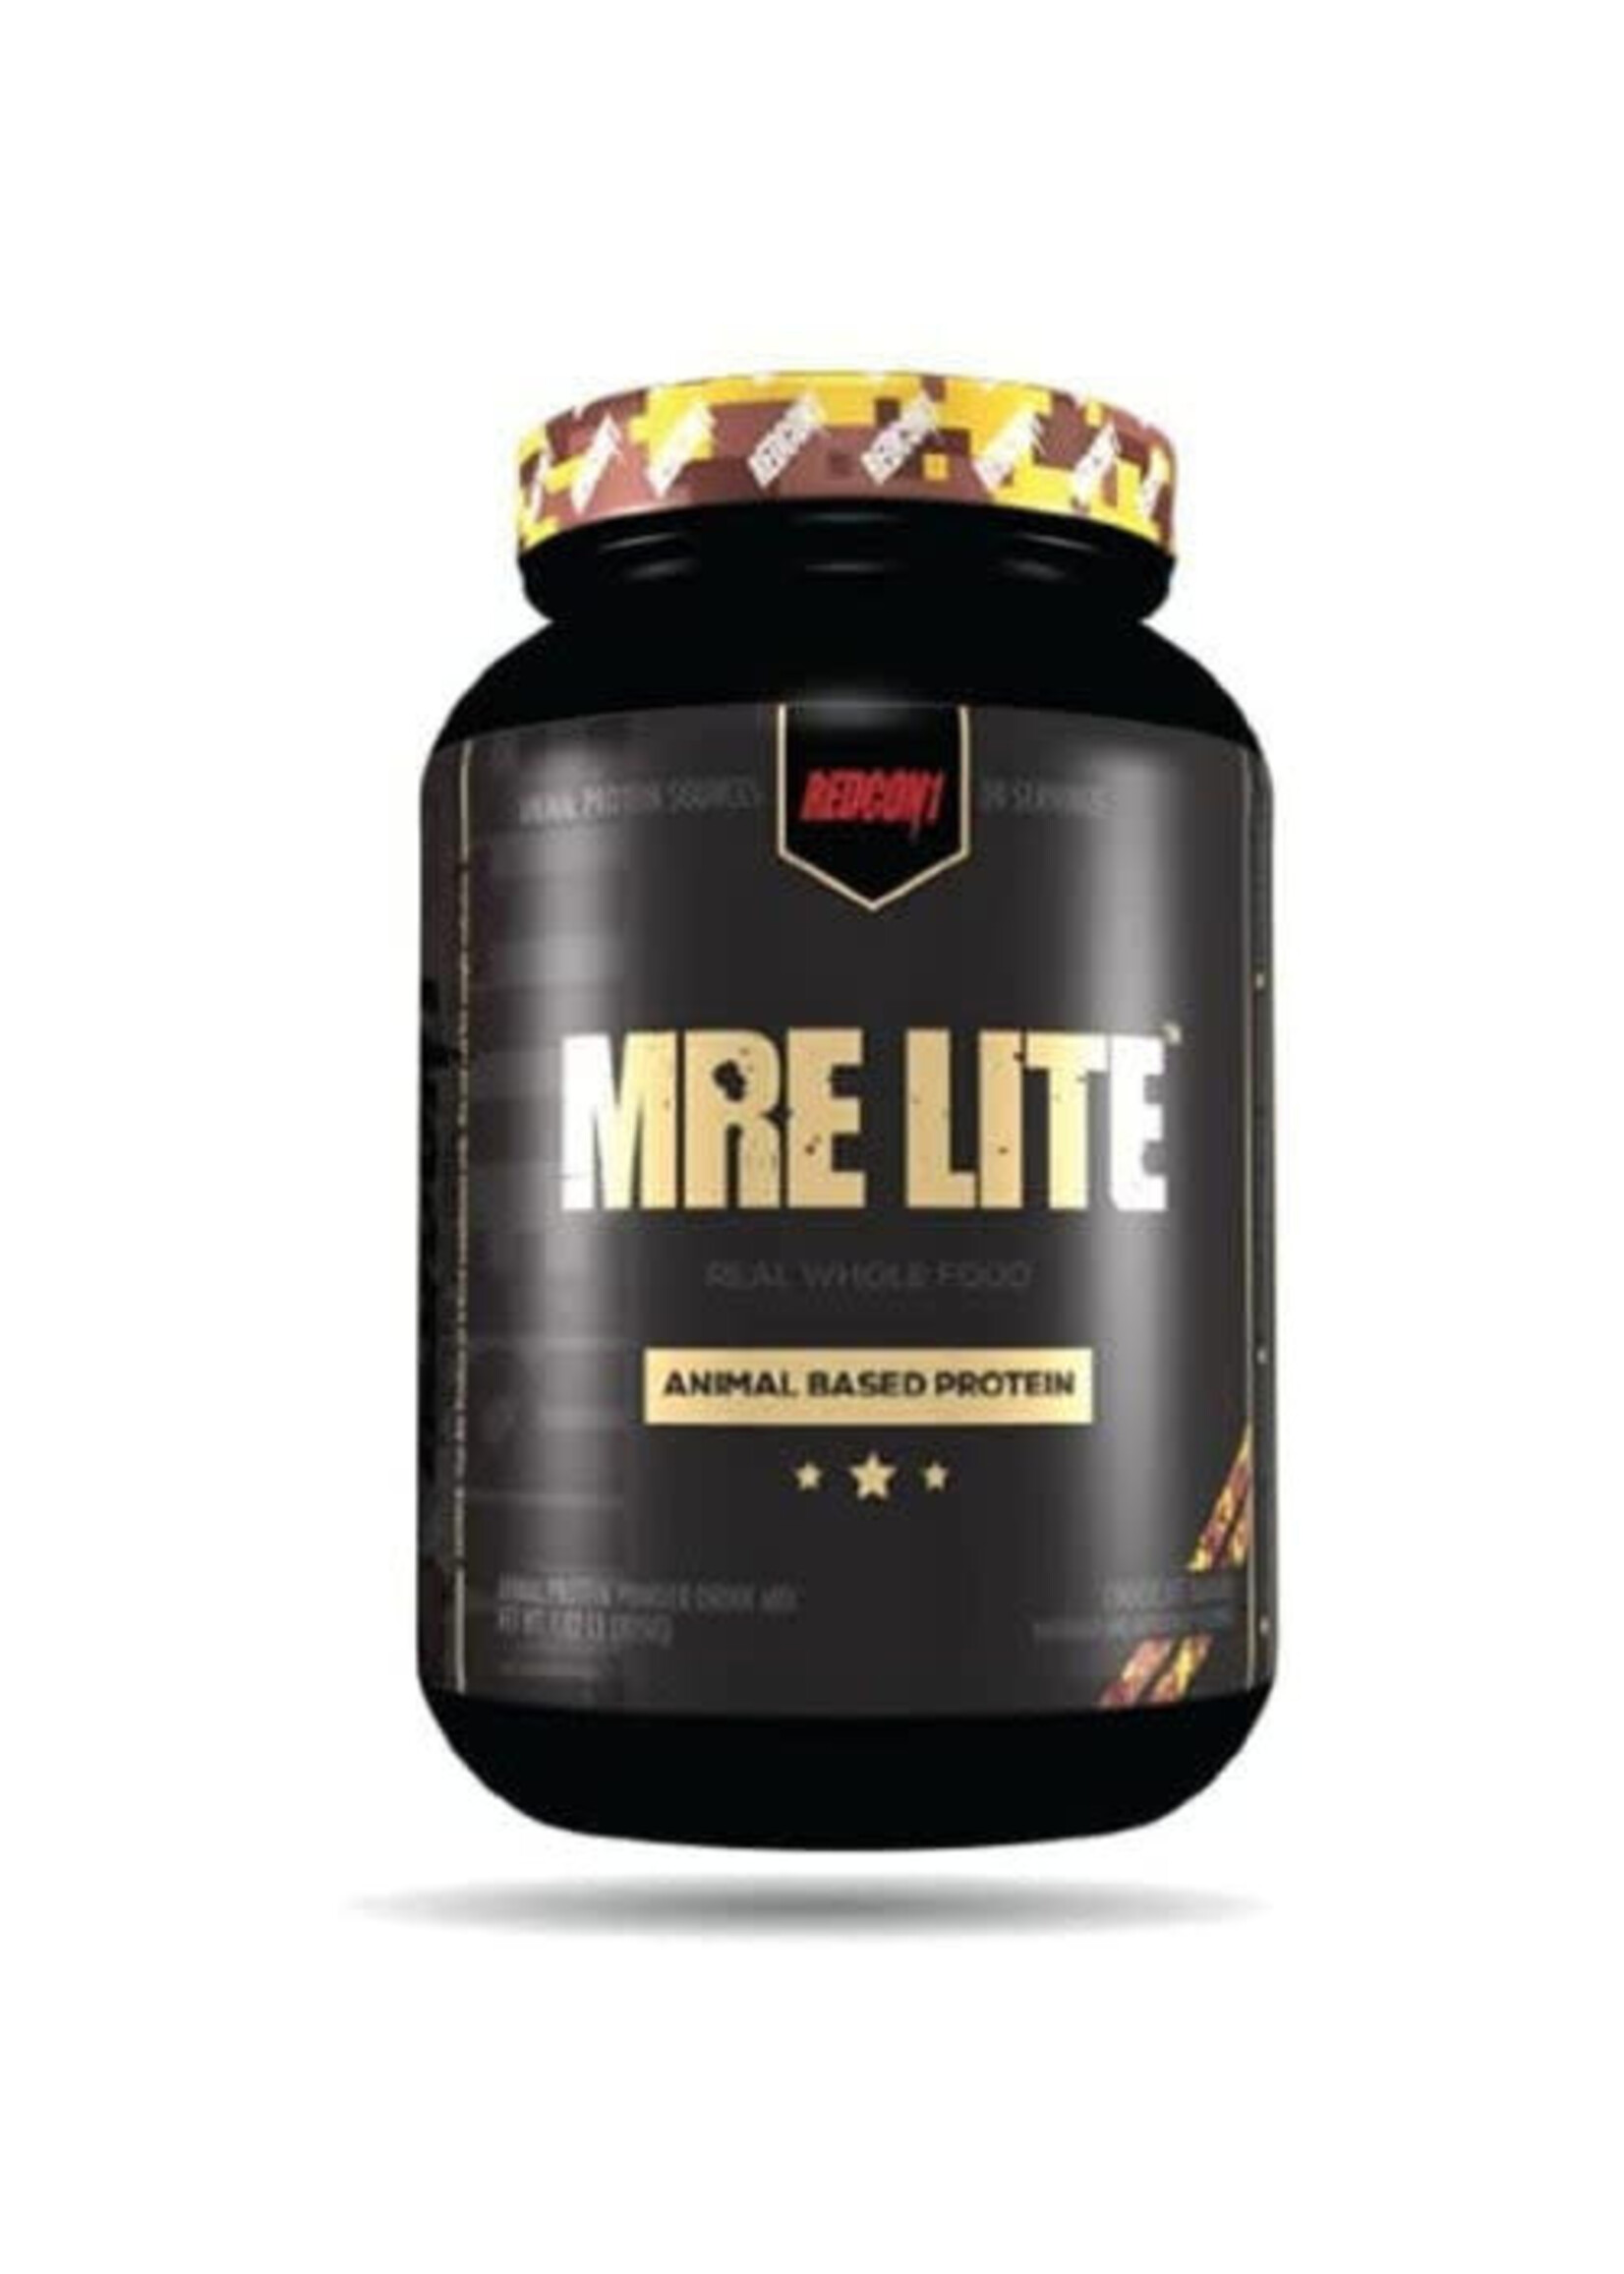 MRE - Rock's Discount Vitamins